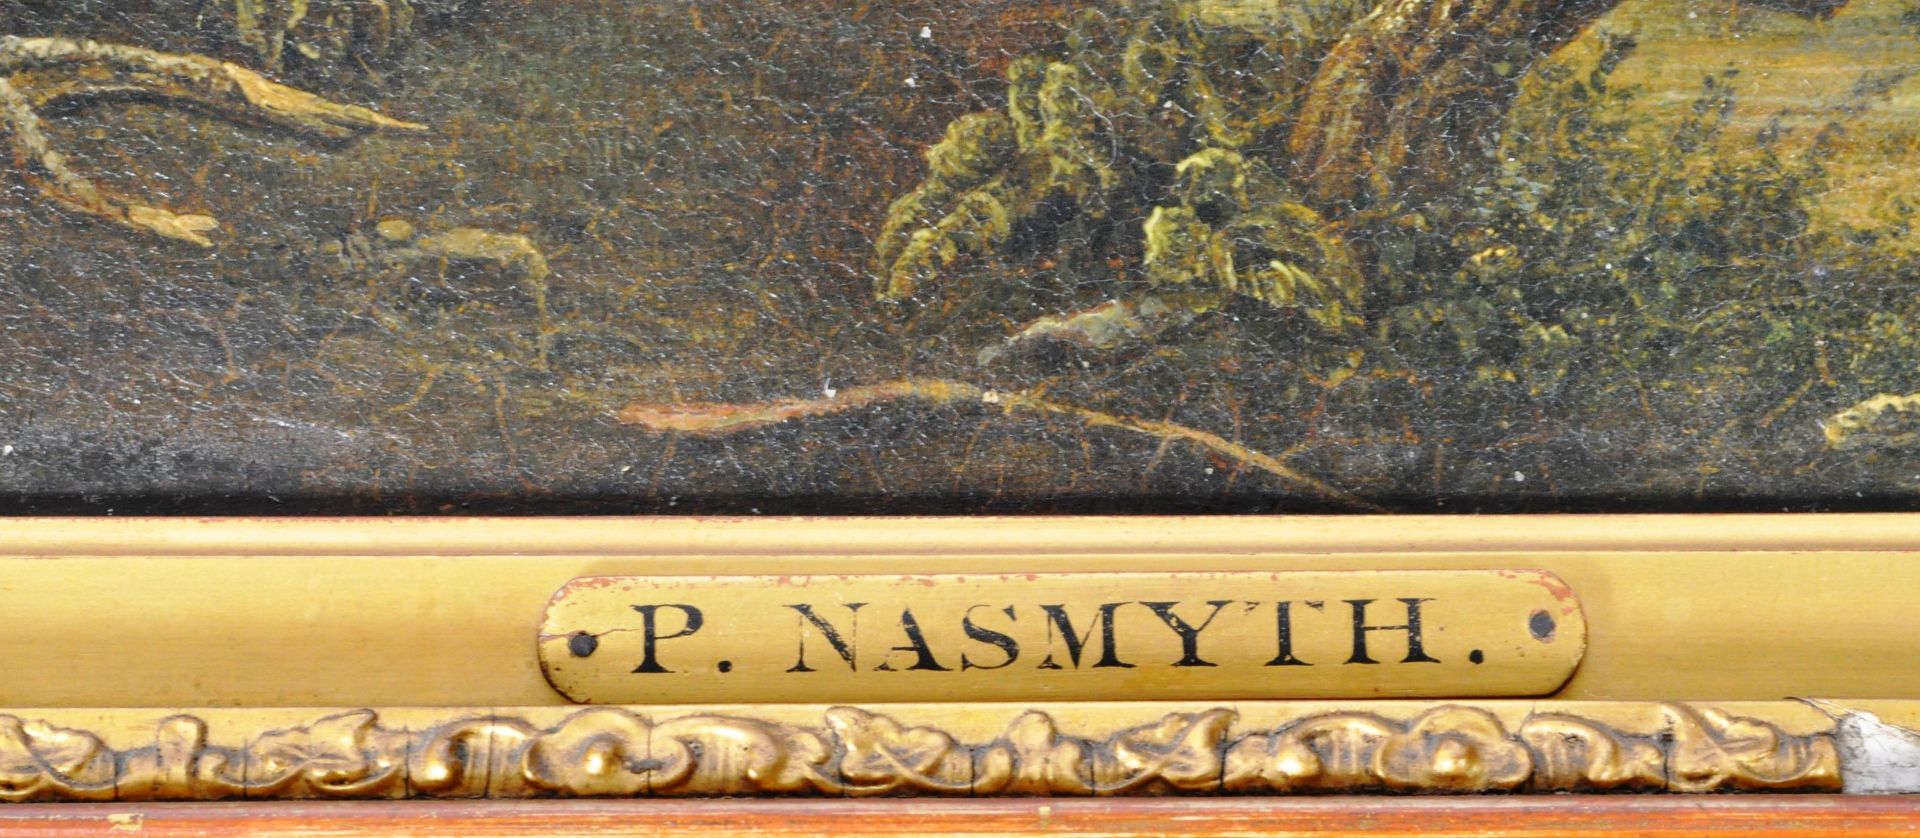 PATRICK NASMYTH (SCOTTISH BORN 1787) - OIL ON CANVAS LANDSCAPE - Image 5 of 12